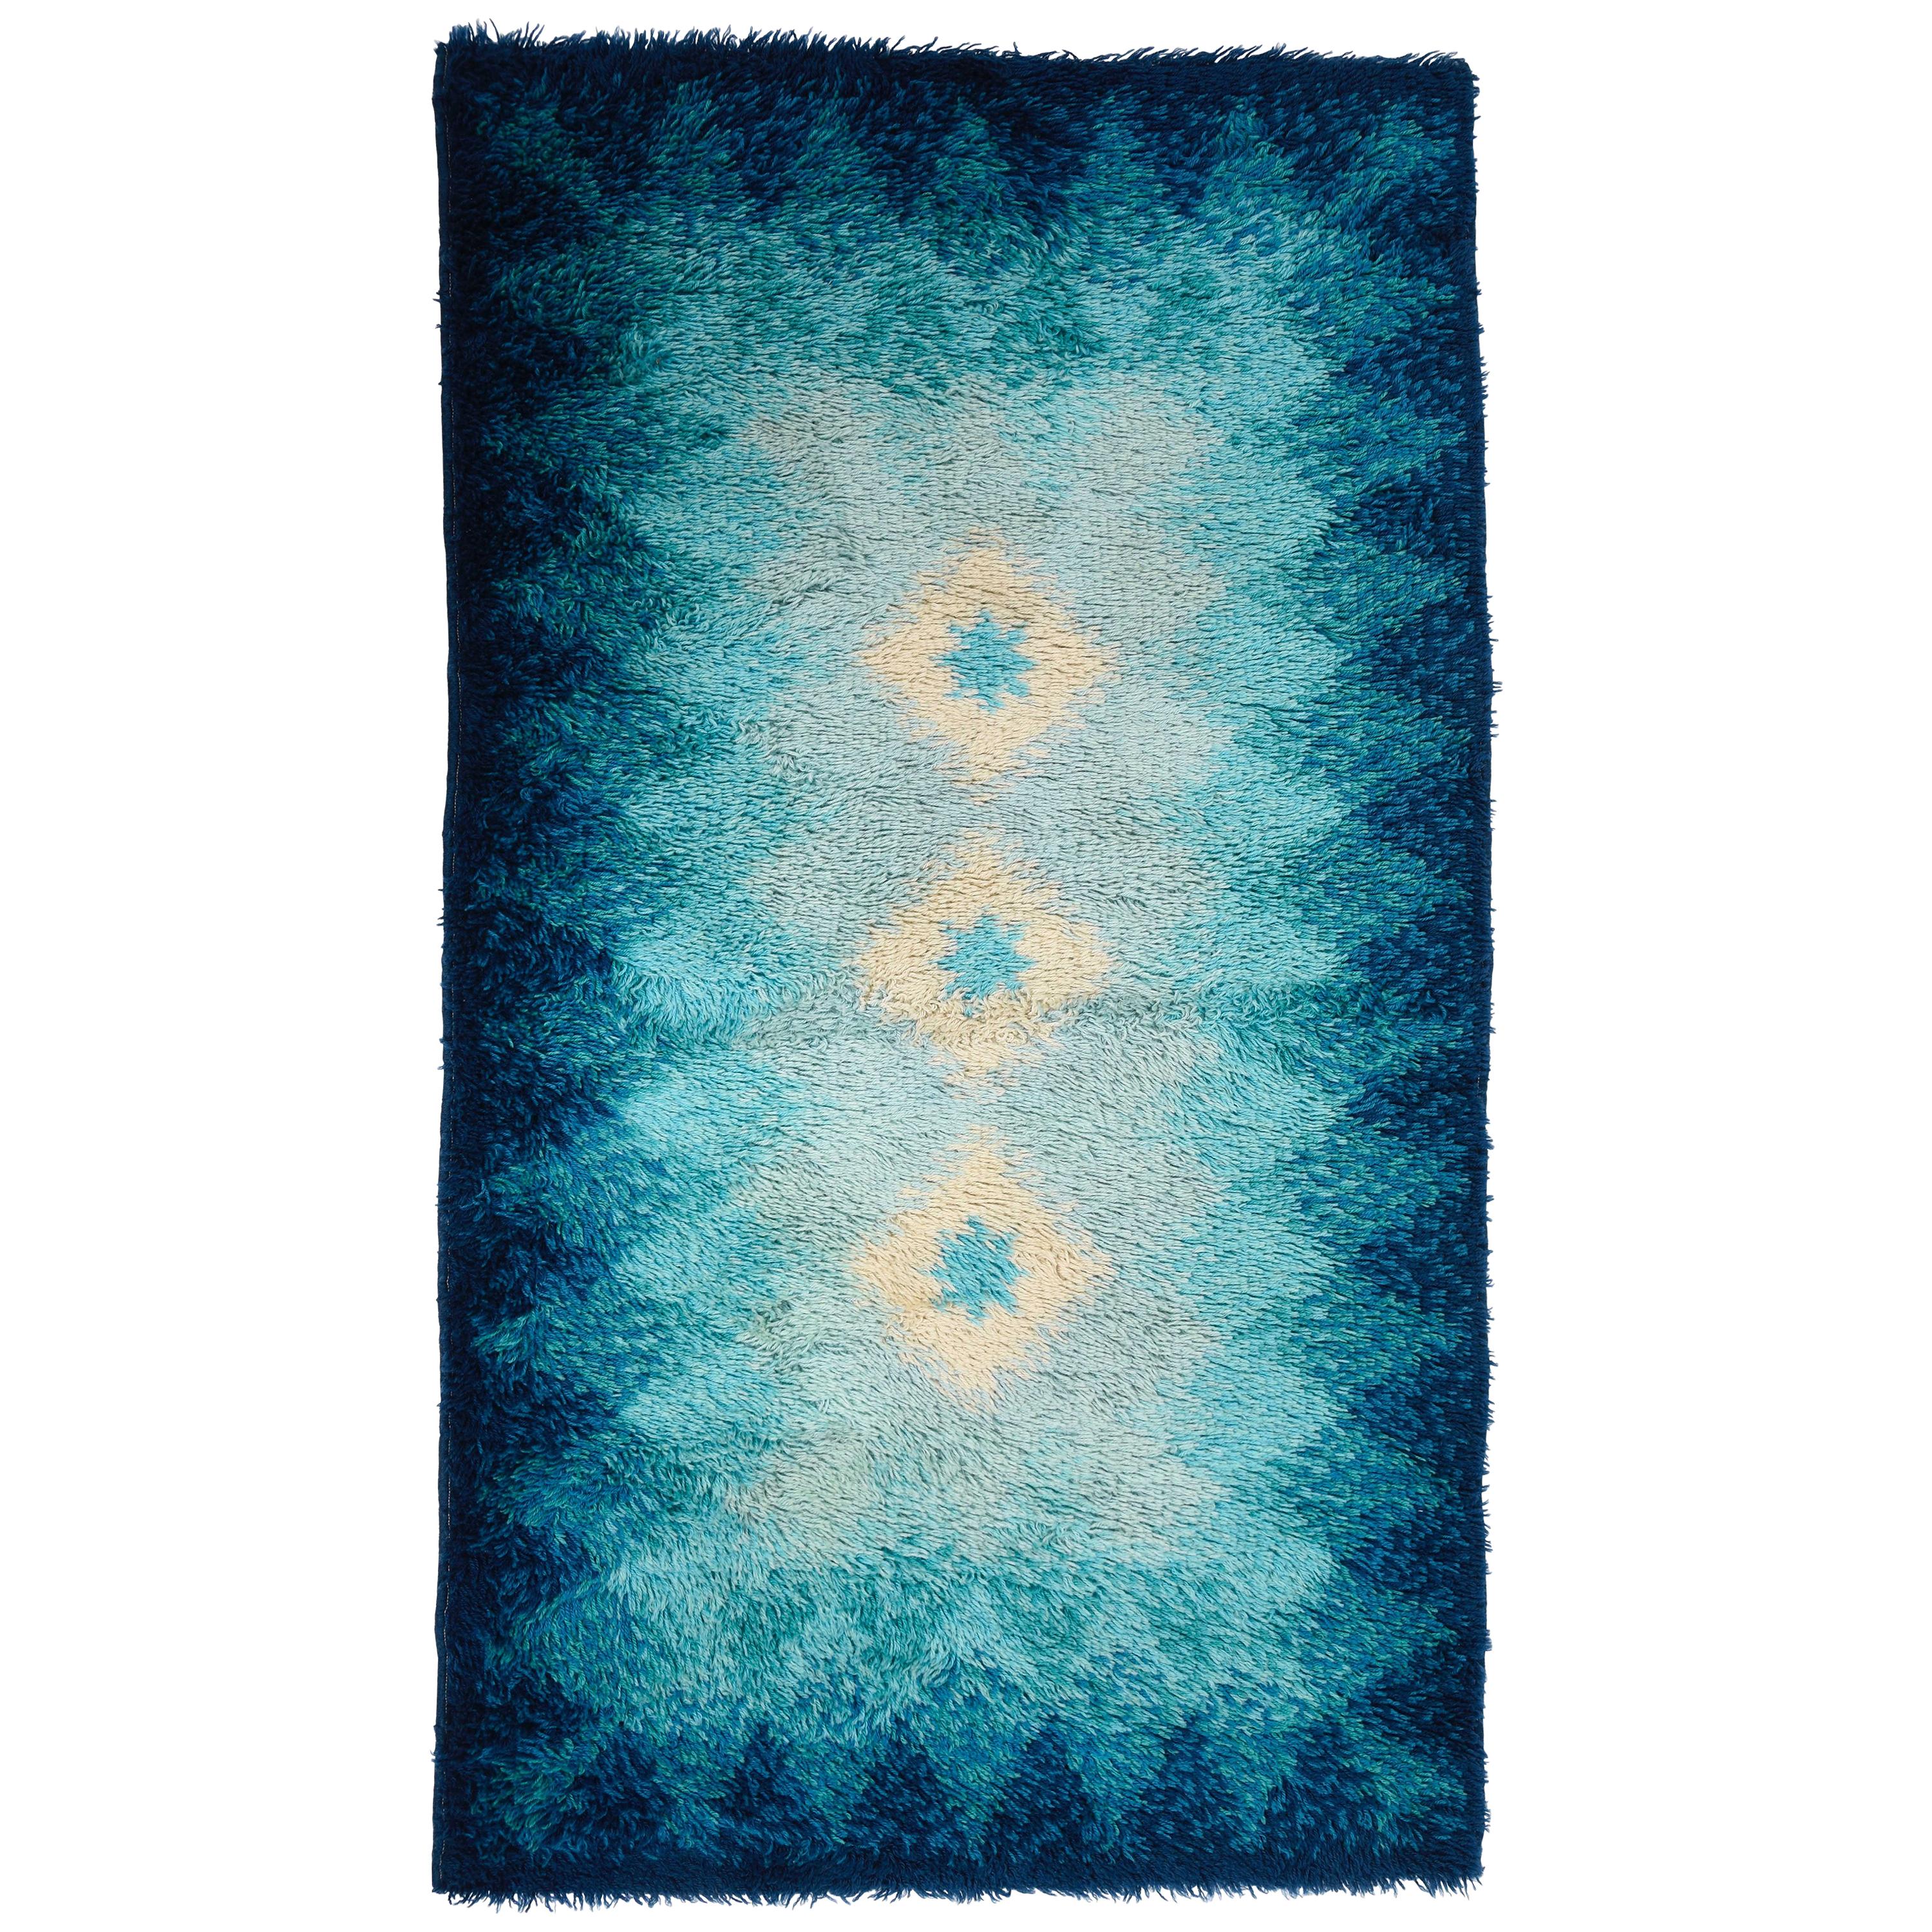 Samit Borgosesia Midcentury Blue and White Virgin Wool Italian Carpet, 1970s For Sale